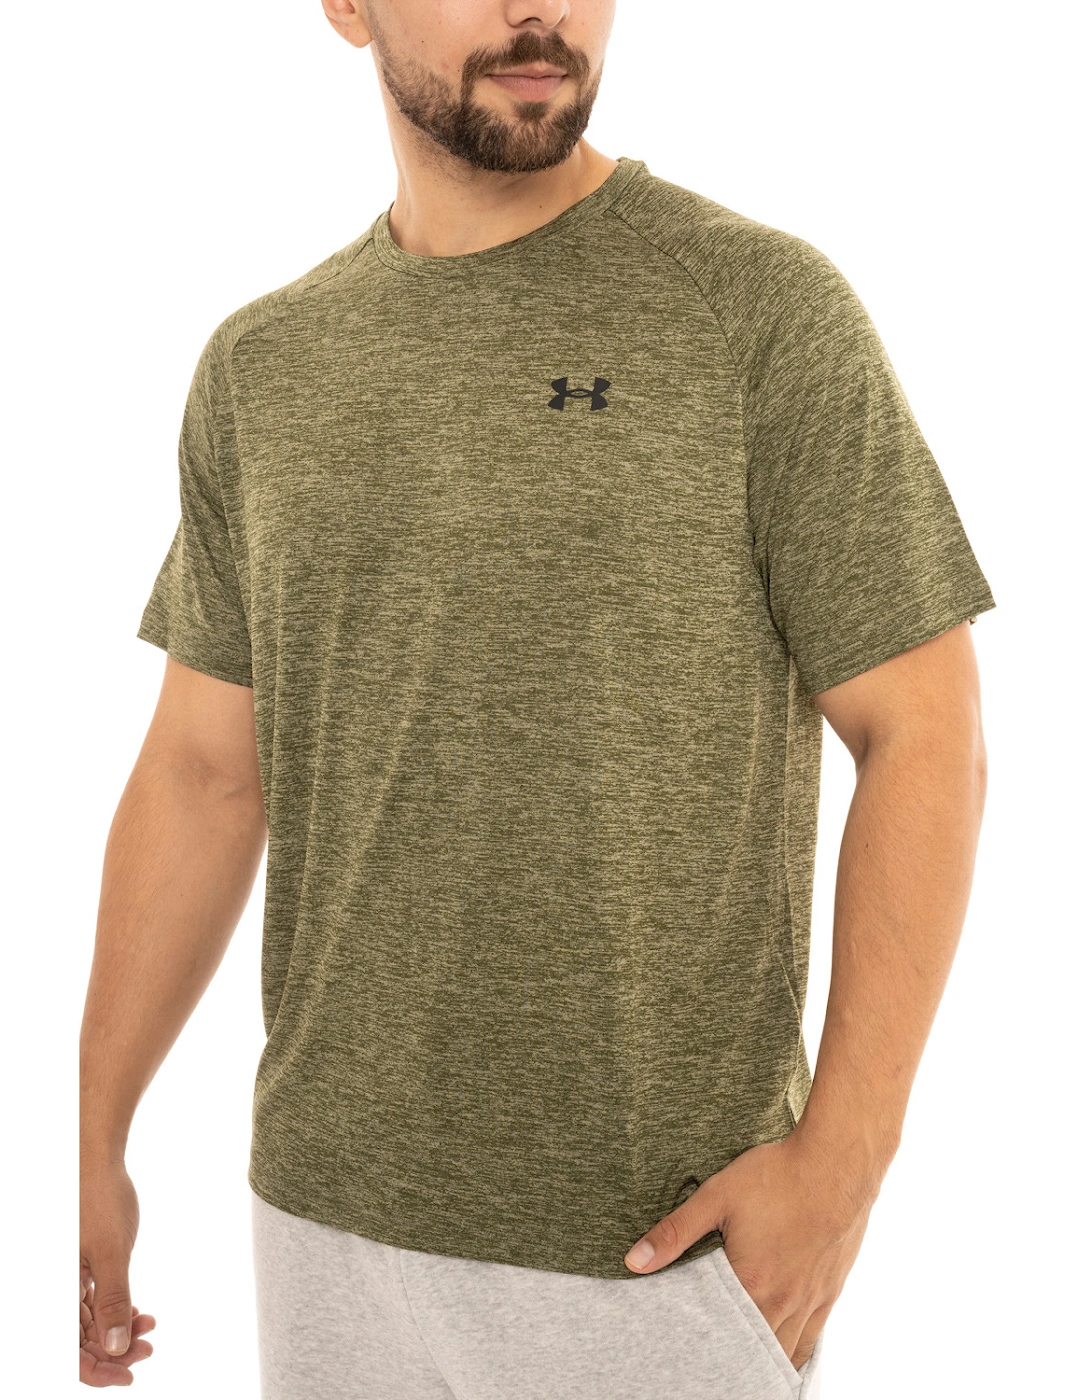 Mens Tech T-Shirt (Olive)